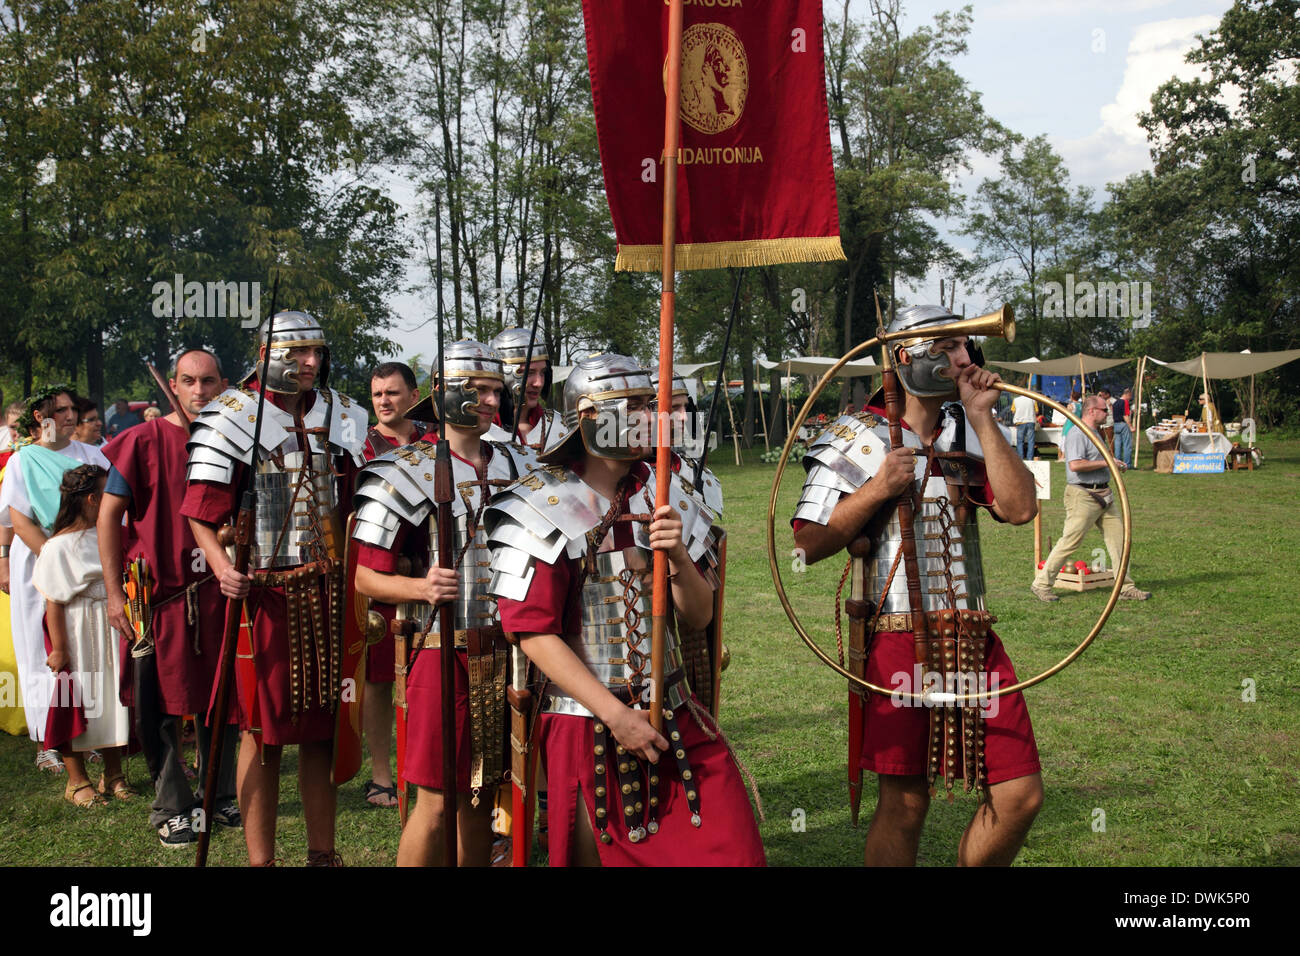 Dionysus festivities in Andautonija, ancient Roman settlement near Zagreb on September 15, 2013 Stock Photo